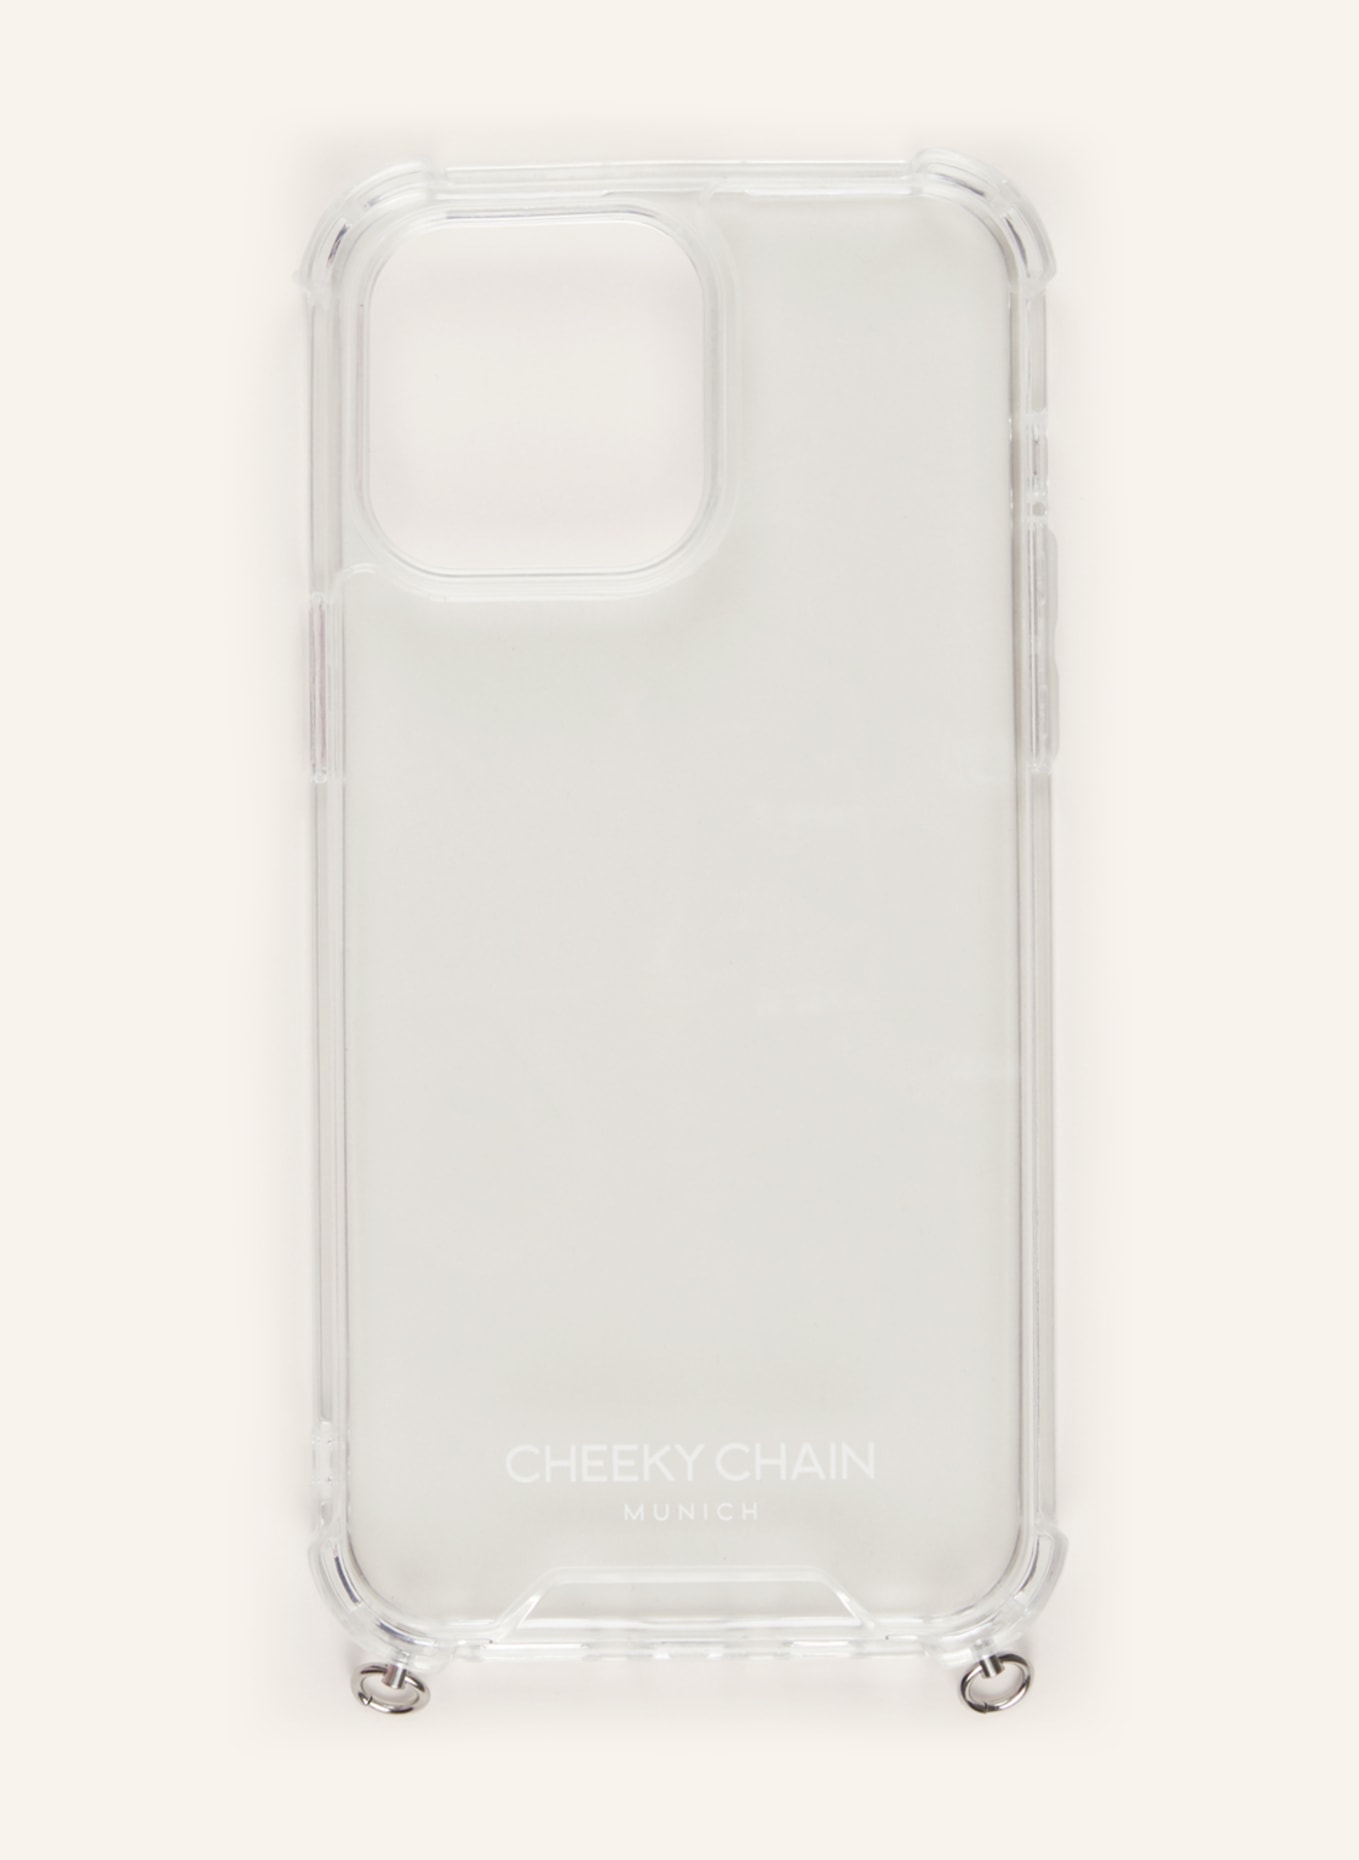 CHEEKY CHAIN MUNICH Smartphone-Hülle, Farbe: crystal clear silver (Bild 1)